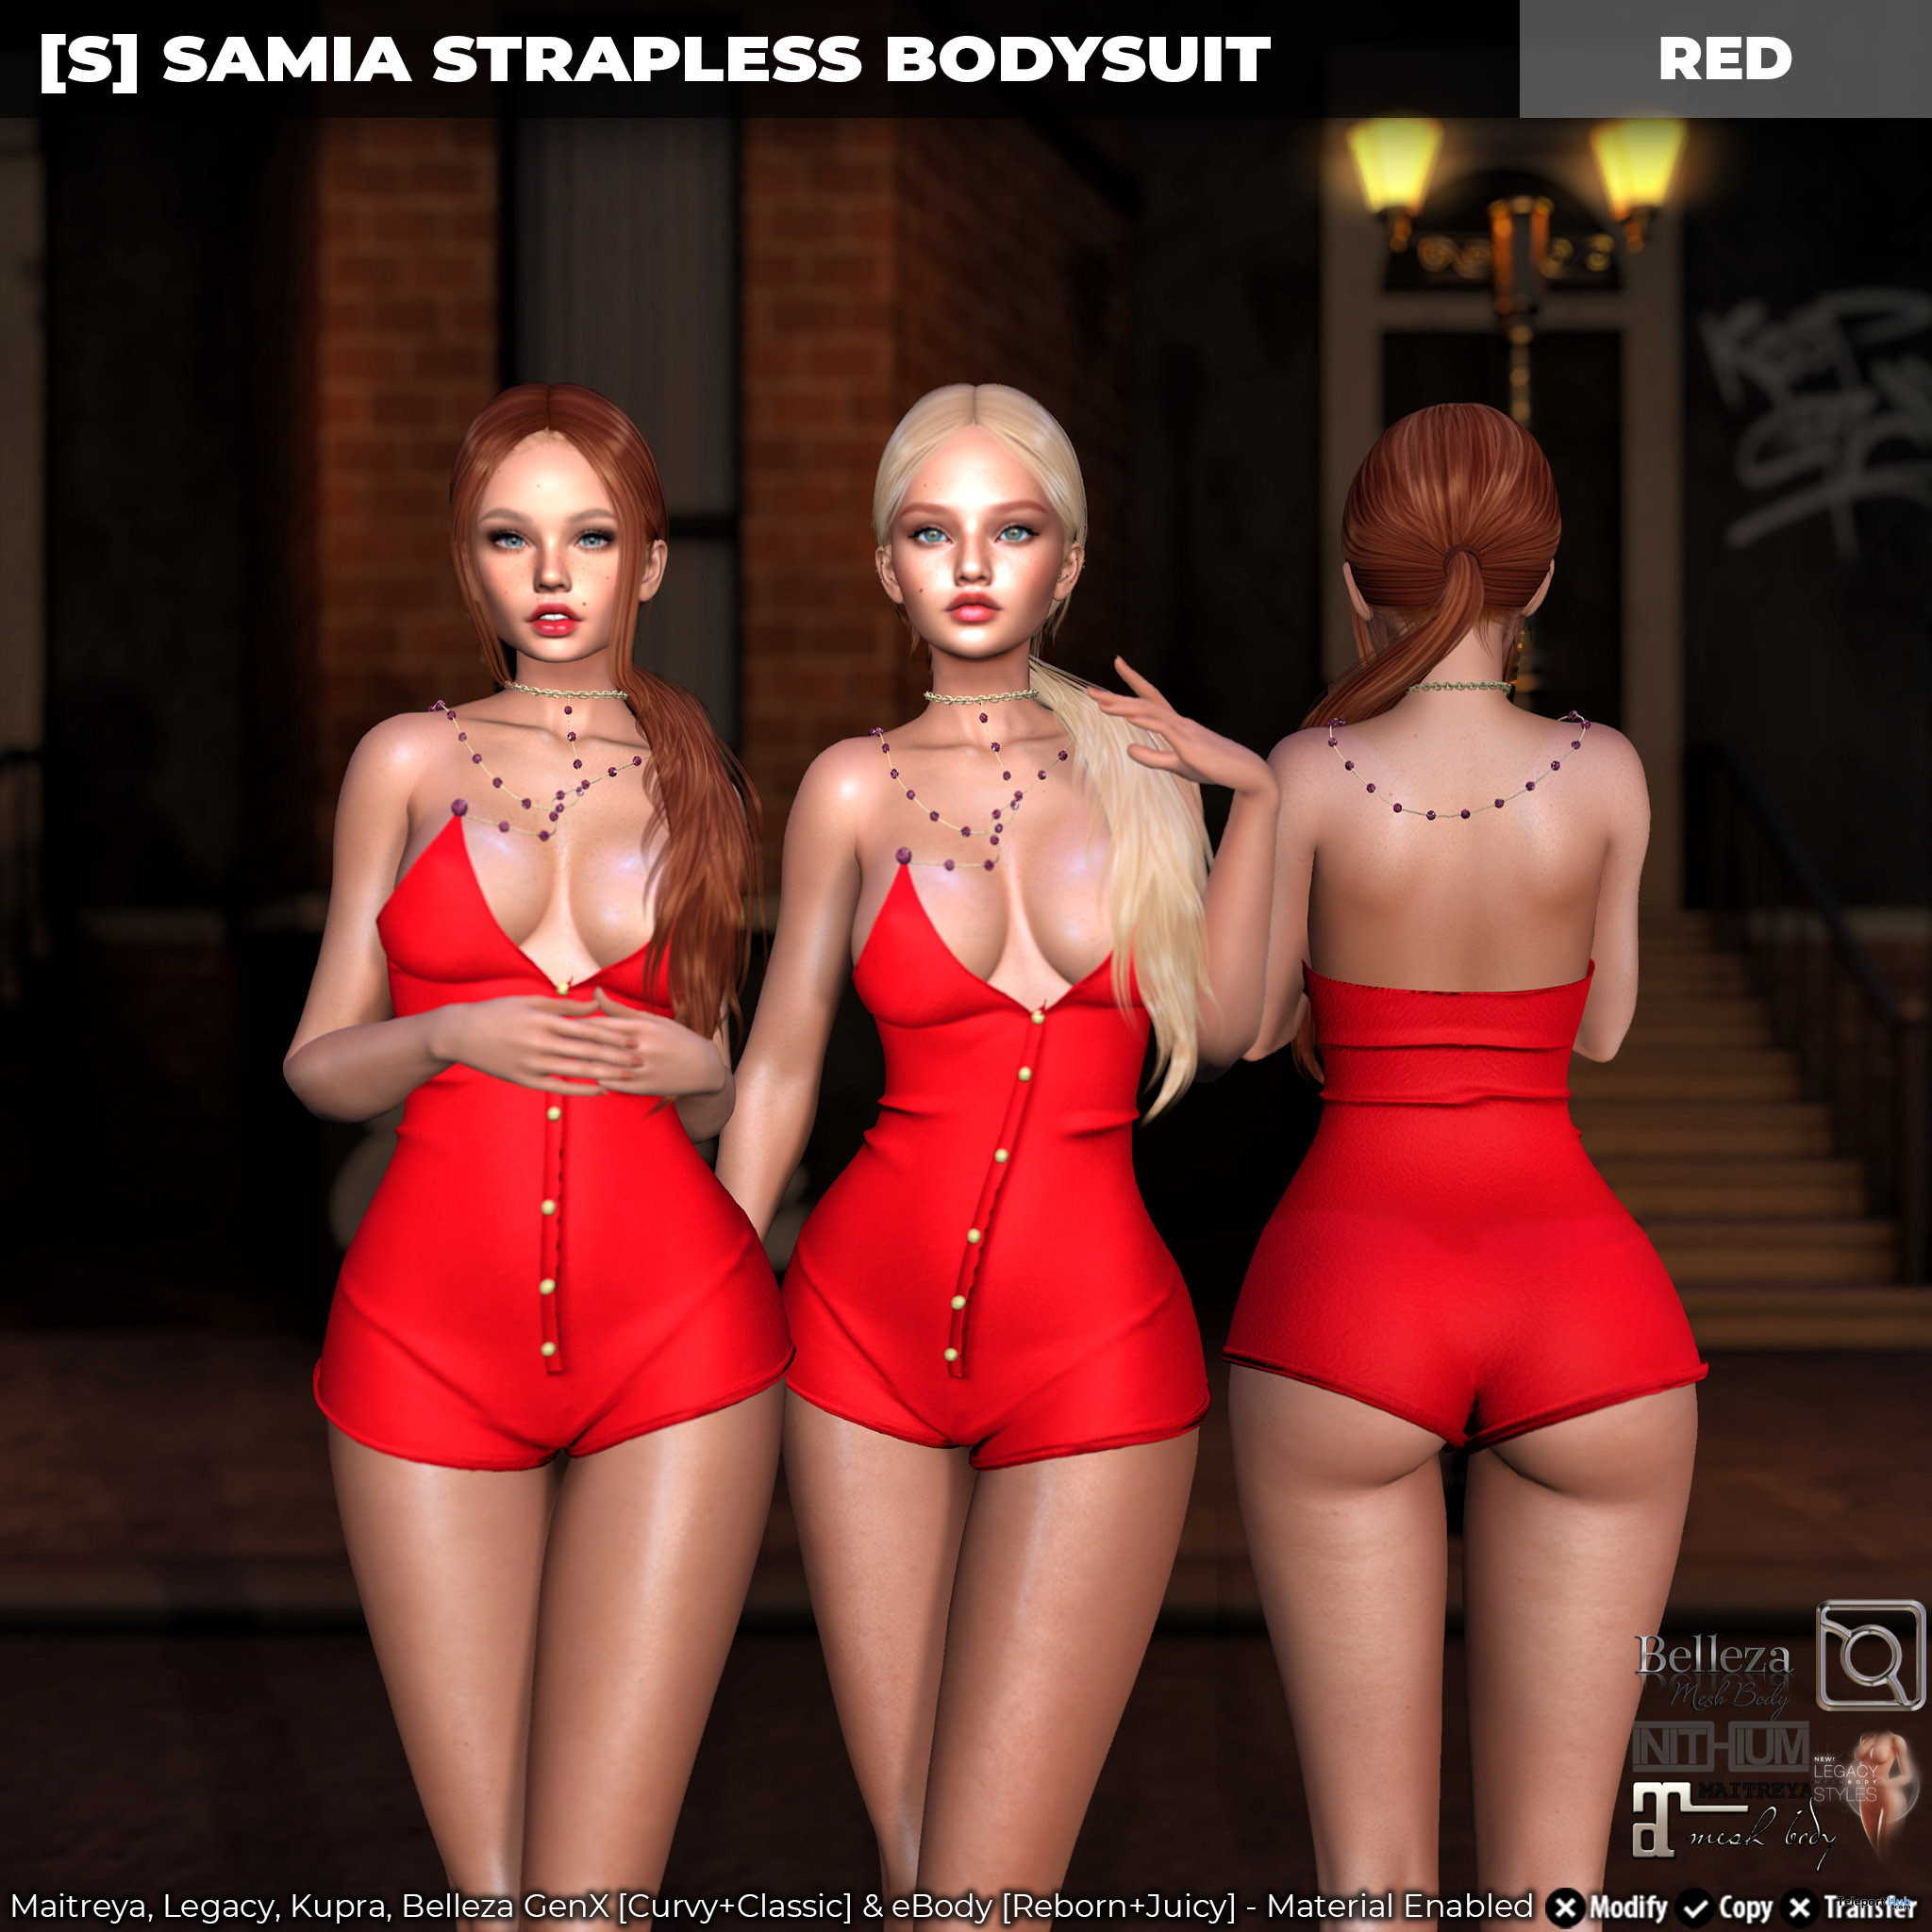 New Release: [S] Samia Strapless Bodysuit by [satus Inc